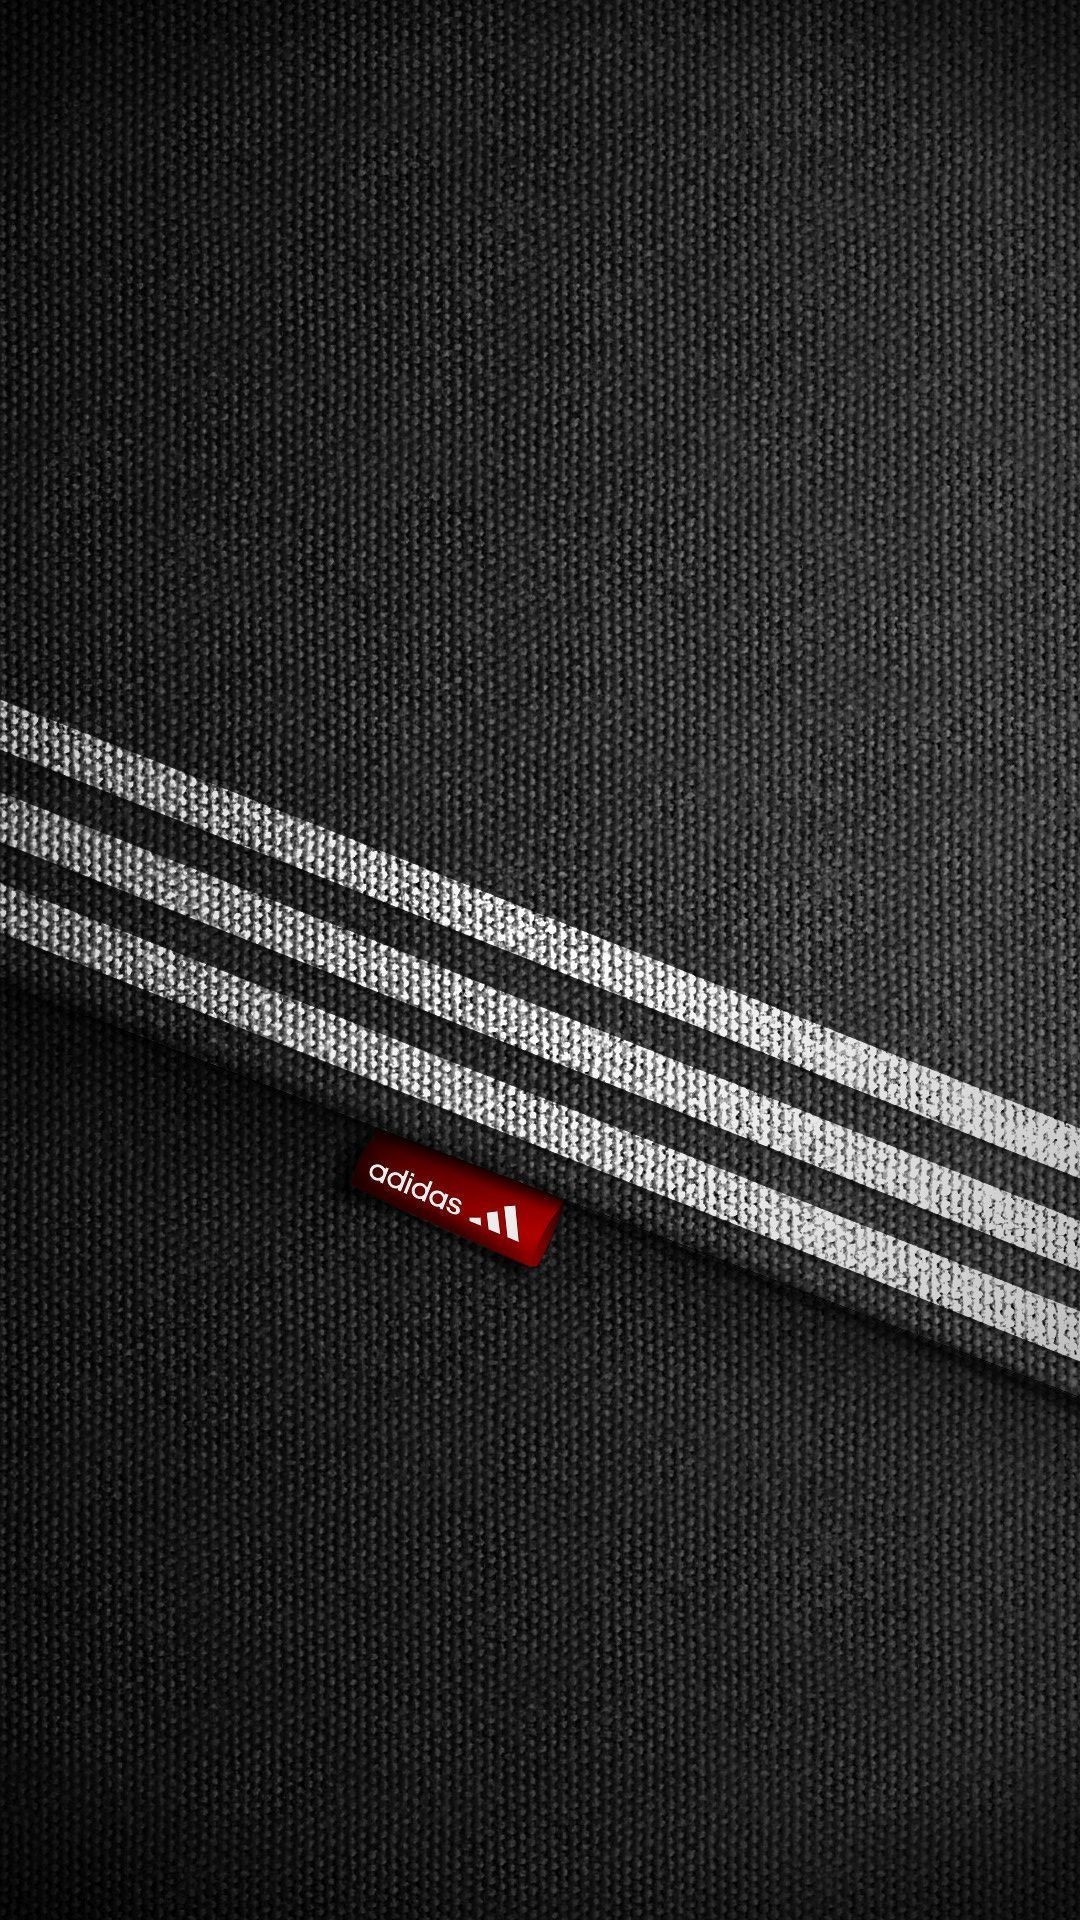 Cool Adidas Wallpaper Iphone X